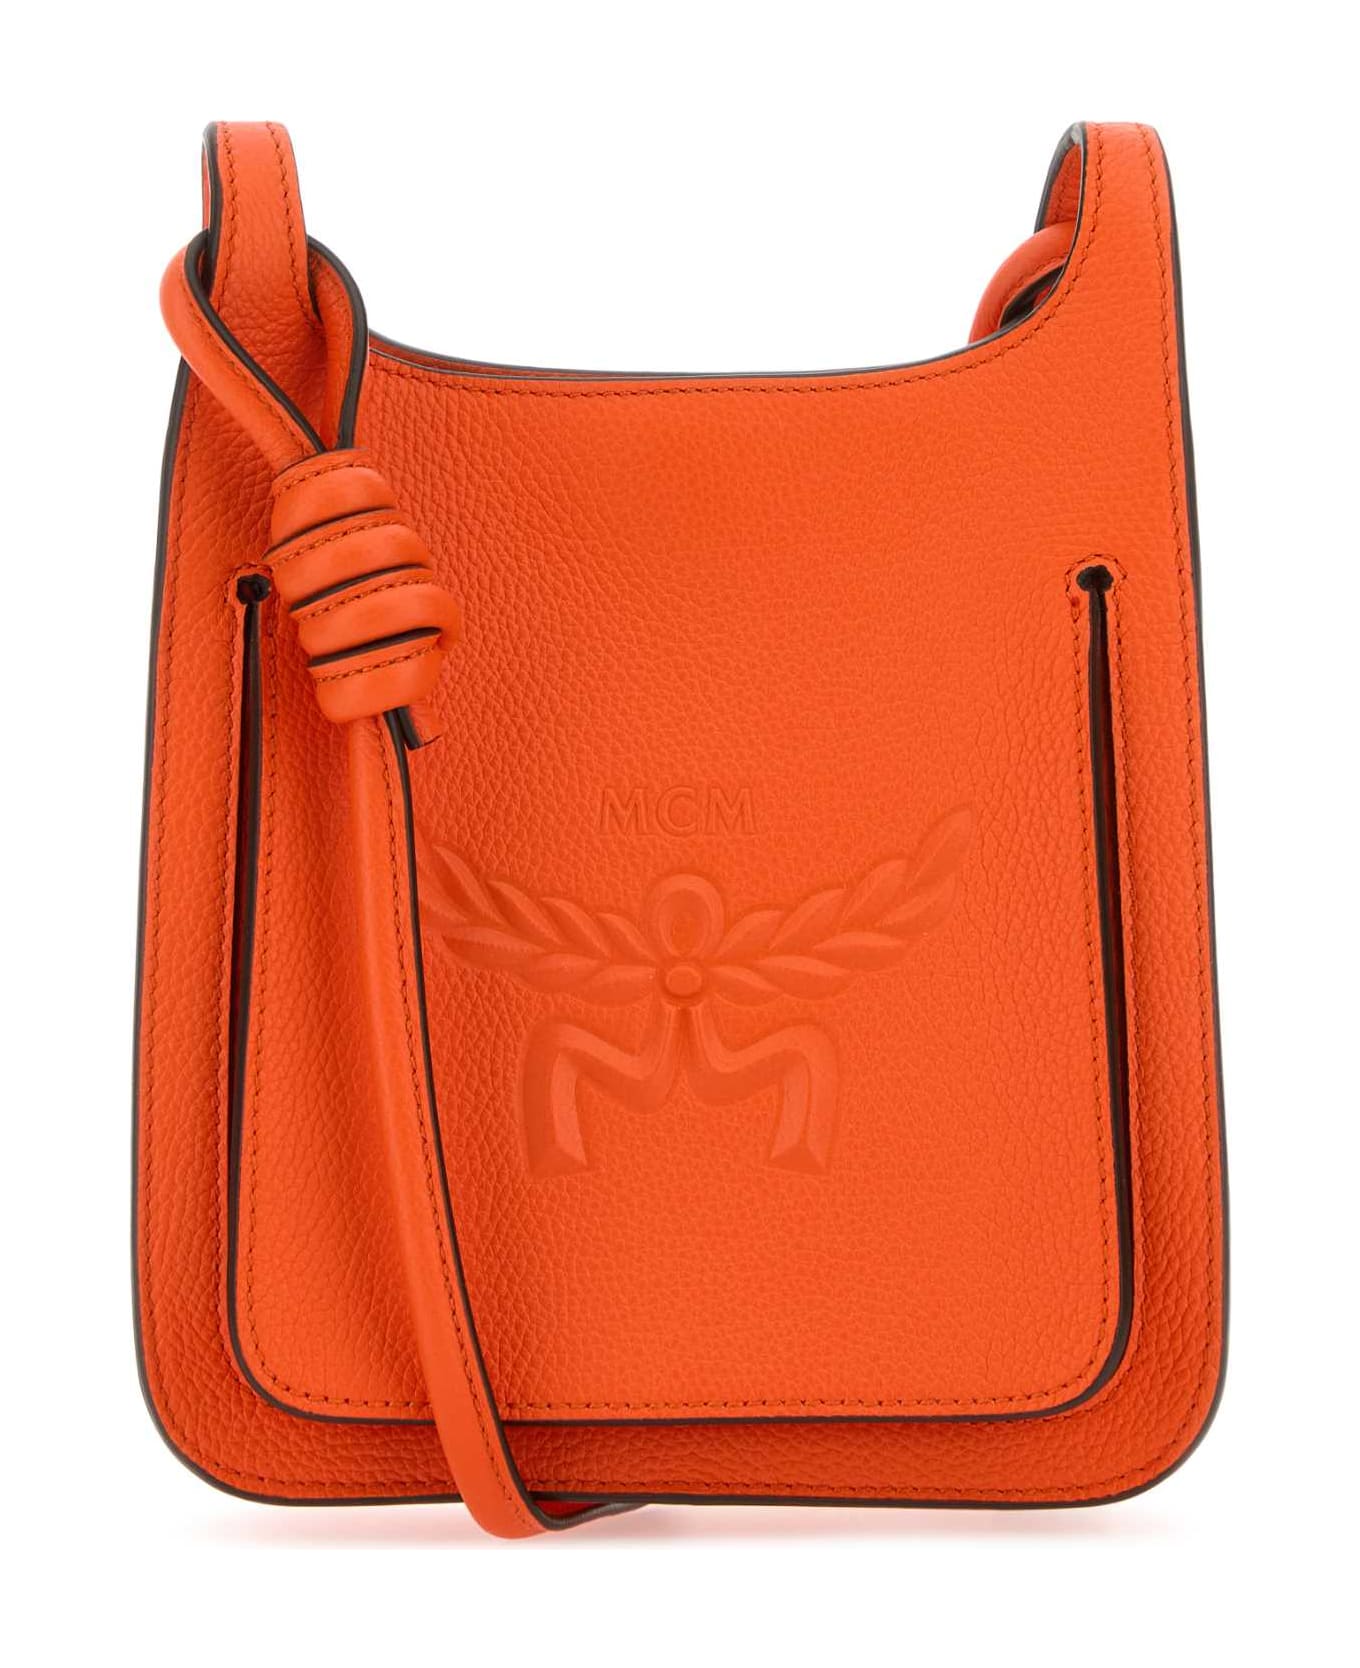 MCM Dark Orange Leather Mini Himmel Hobo Crossbody Bag - ORANGEADE